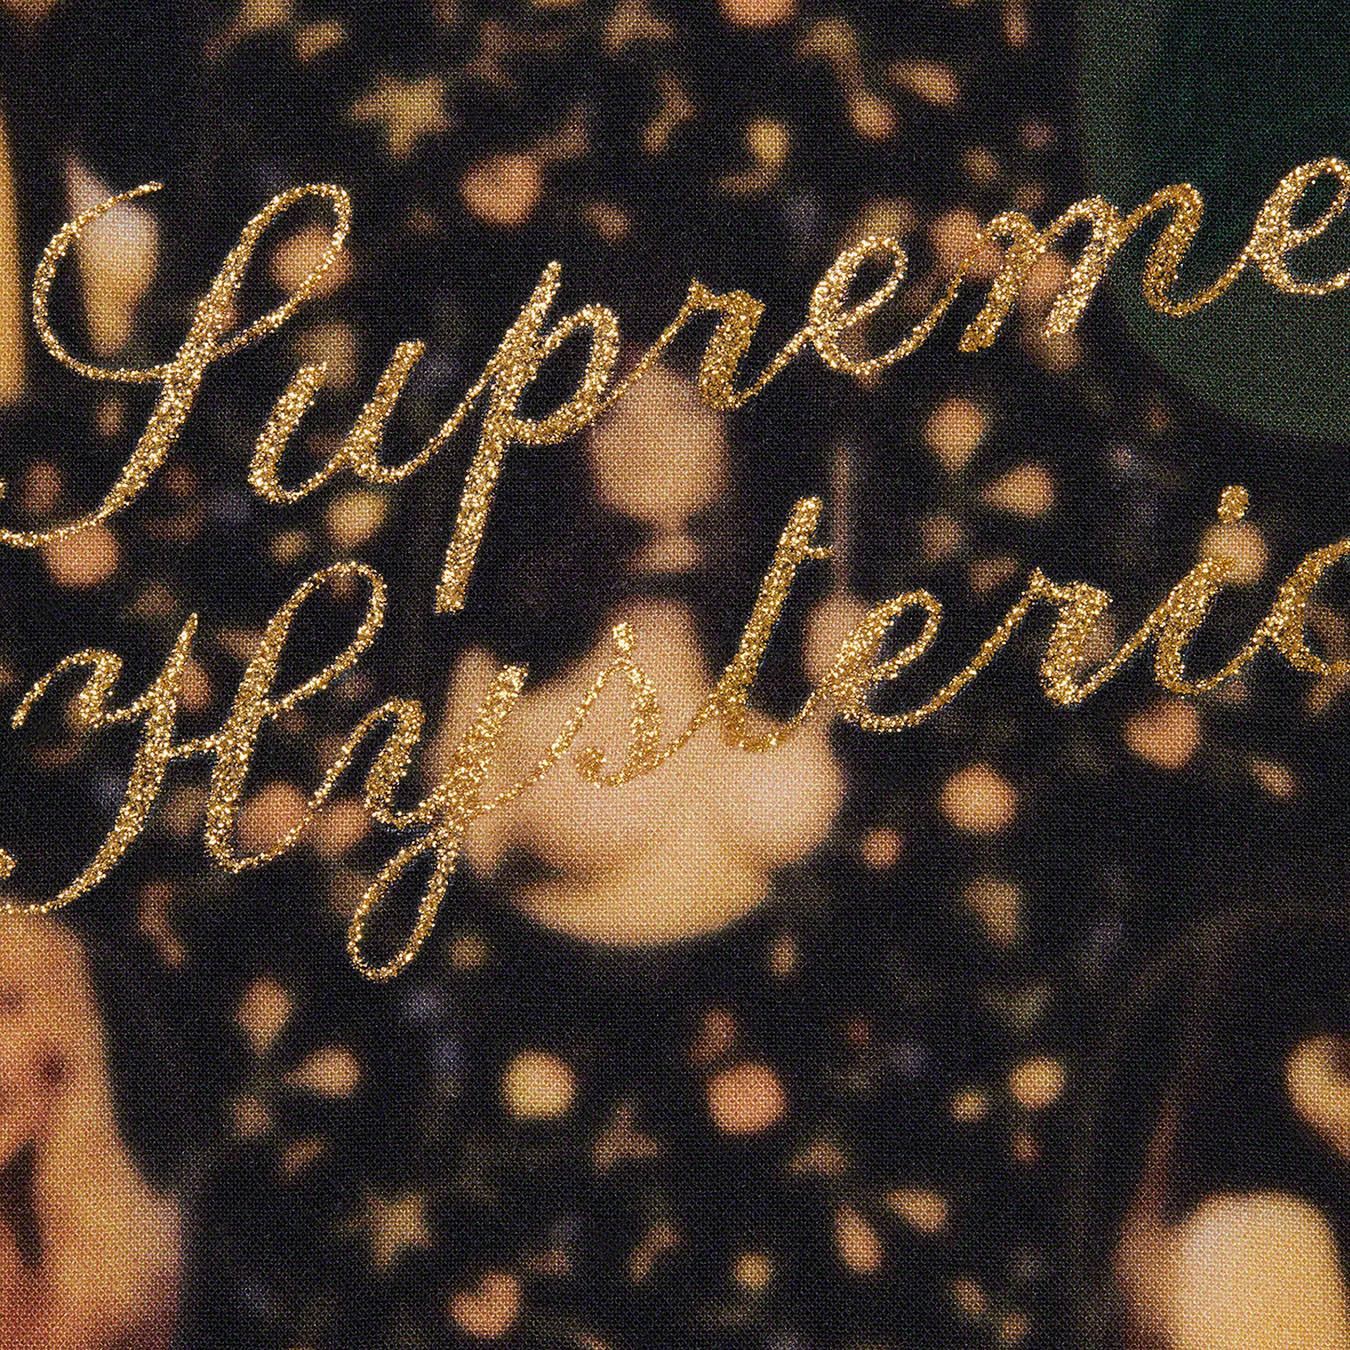 Supreme®/HYSTERIC GLAMOUR Blurred Girls Rayon S/S Shirt